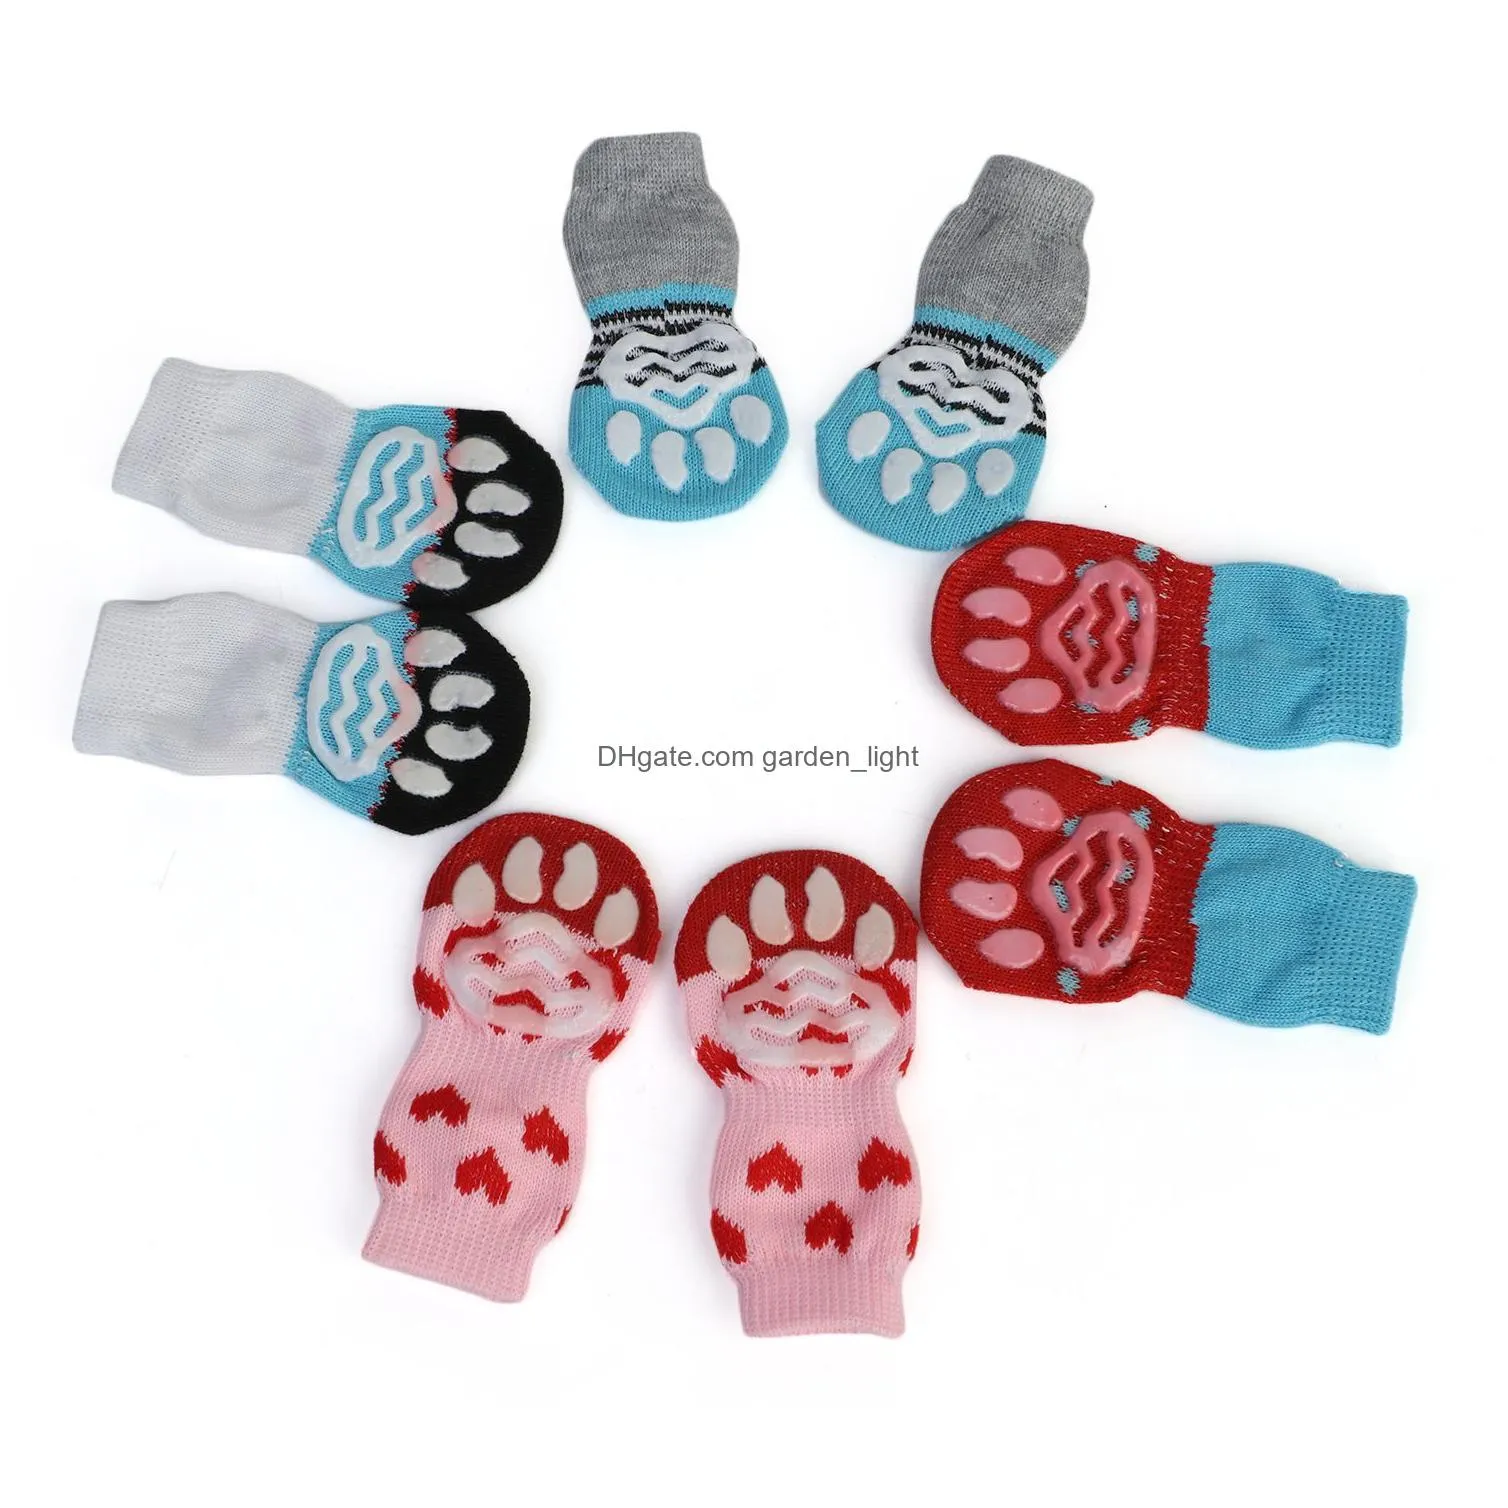 antiskid paws dirts away easy washing dog cat shoe socks pet dog socks cute 4 pcs/set indoor soft quality cotton warm dh0335